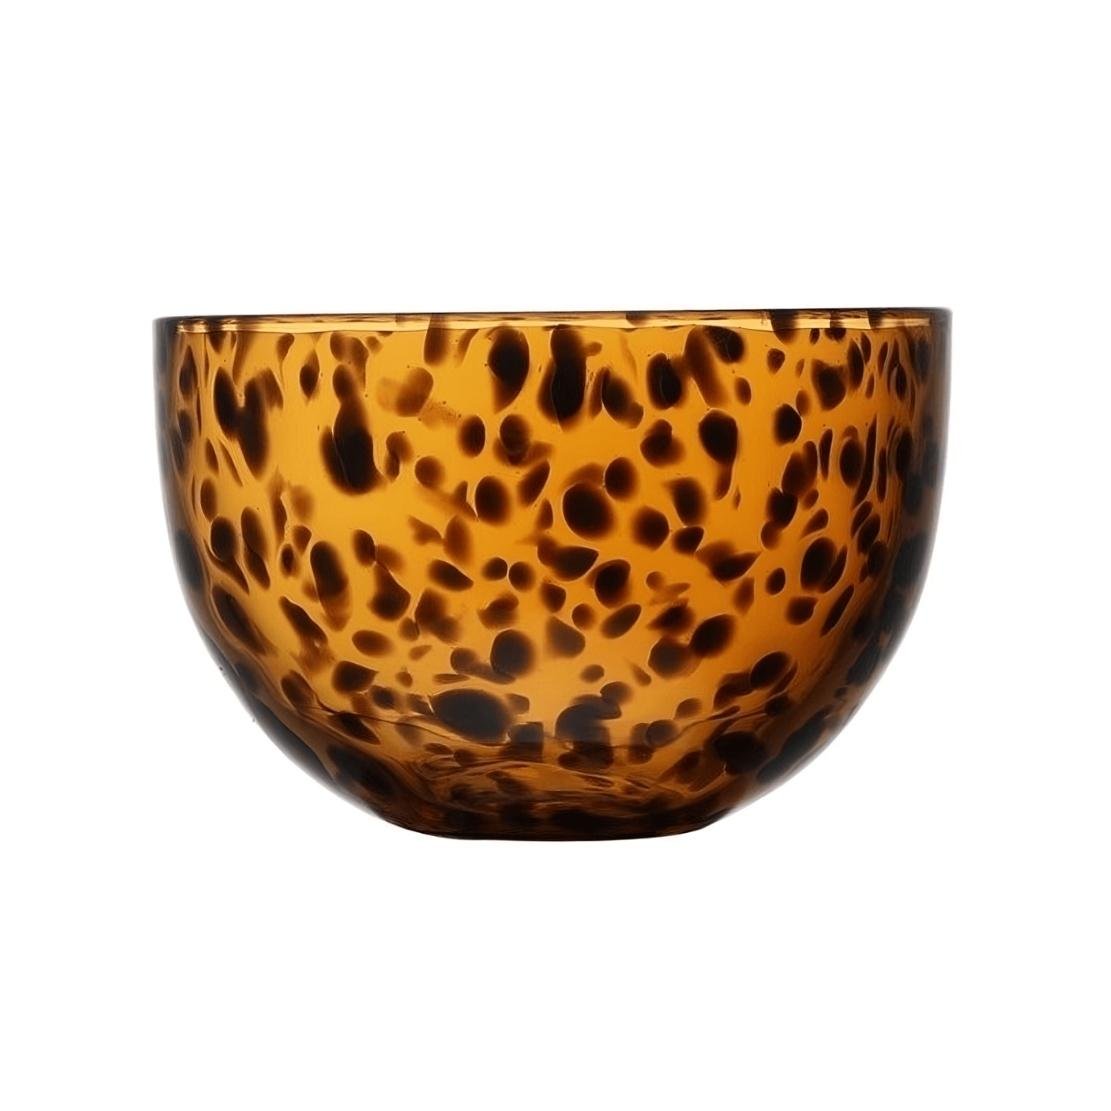 Brown glass tortoiseshell pattern bowl